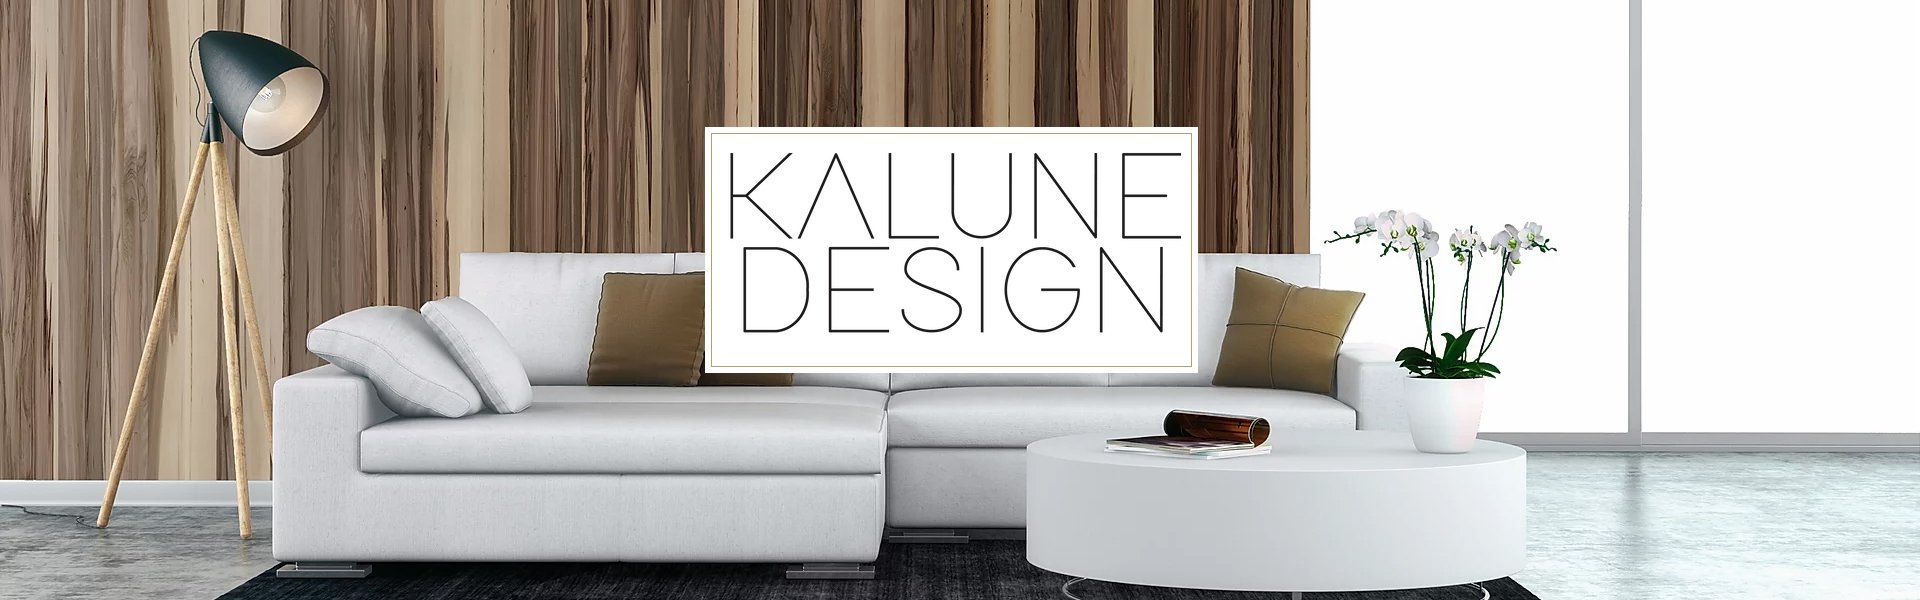 Riidenagi Kalune Design P2, pruun Kalune Design